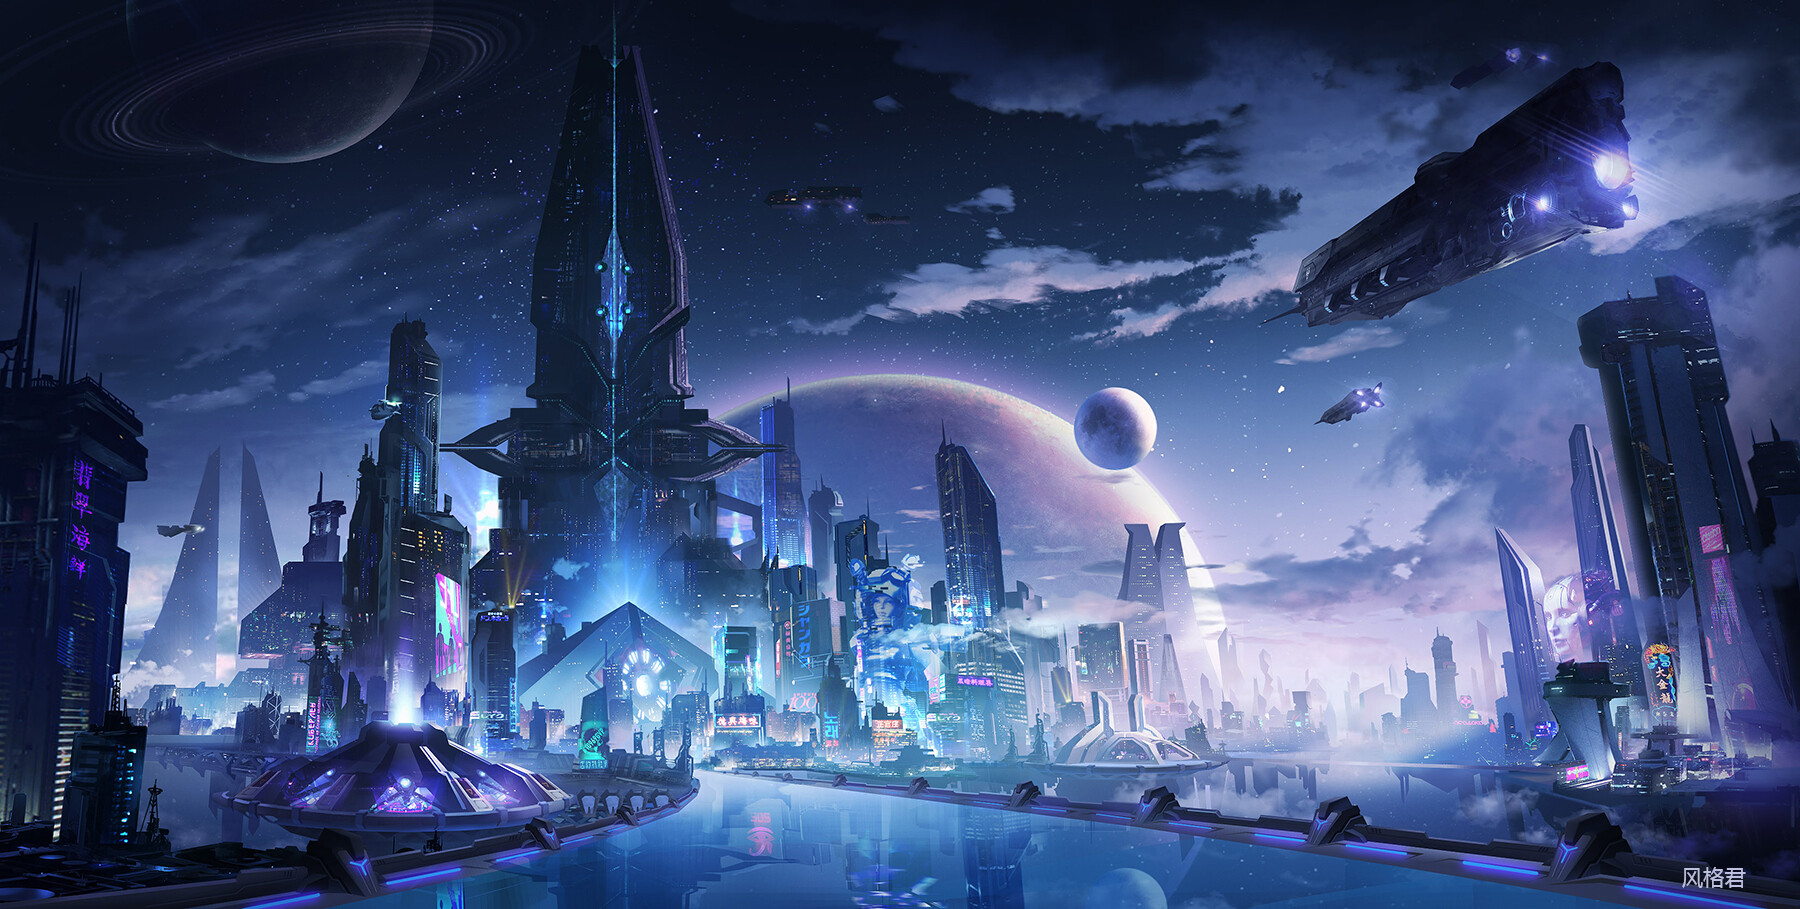 General 1800x909 Jun Zhang fantasy art digital art landscape fantasy city science fiction spaceship futuristic city